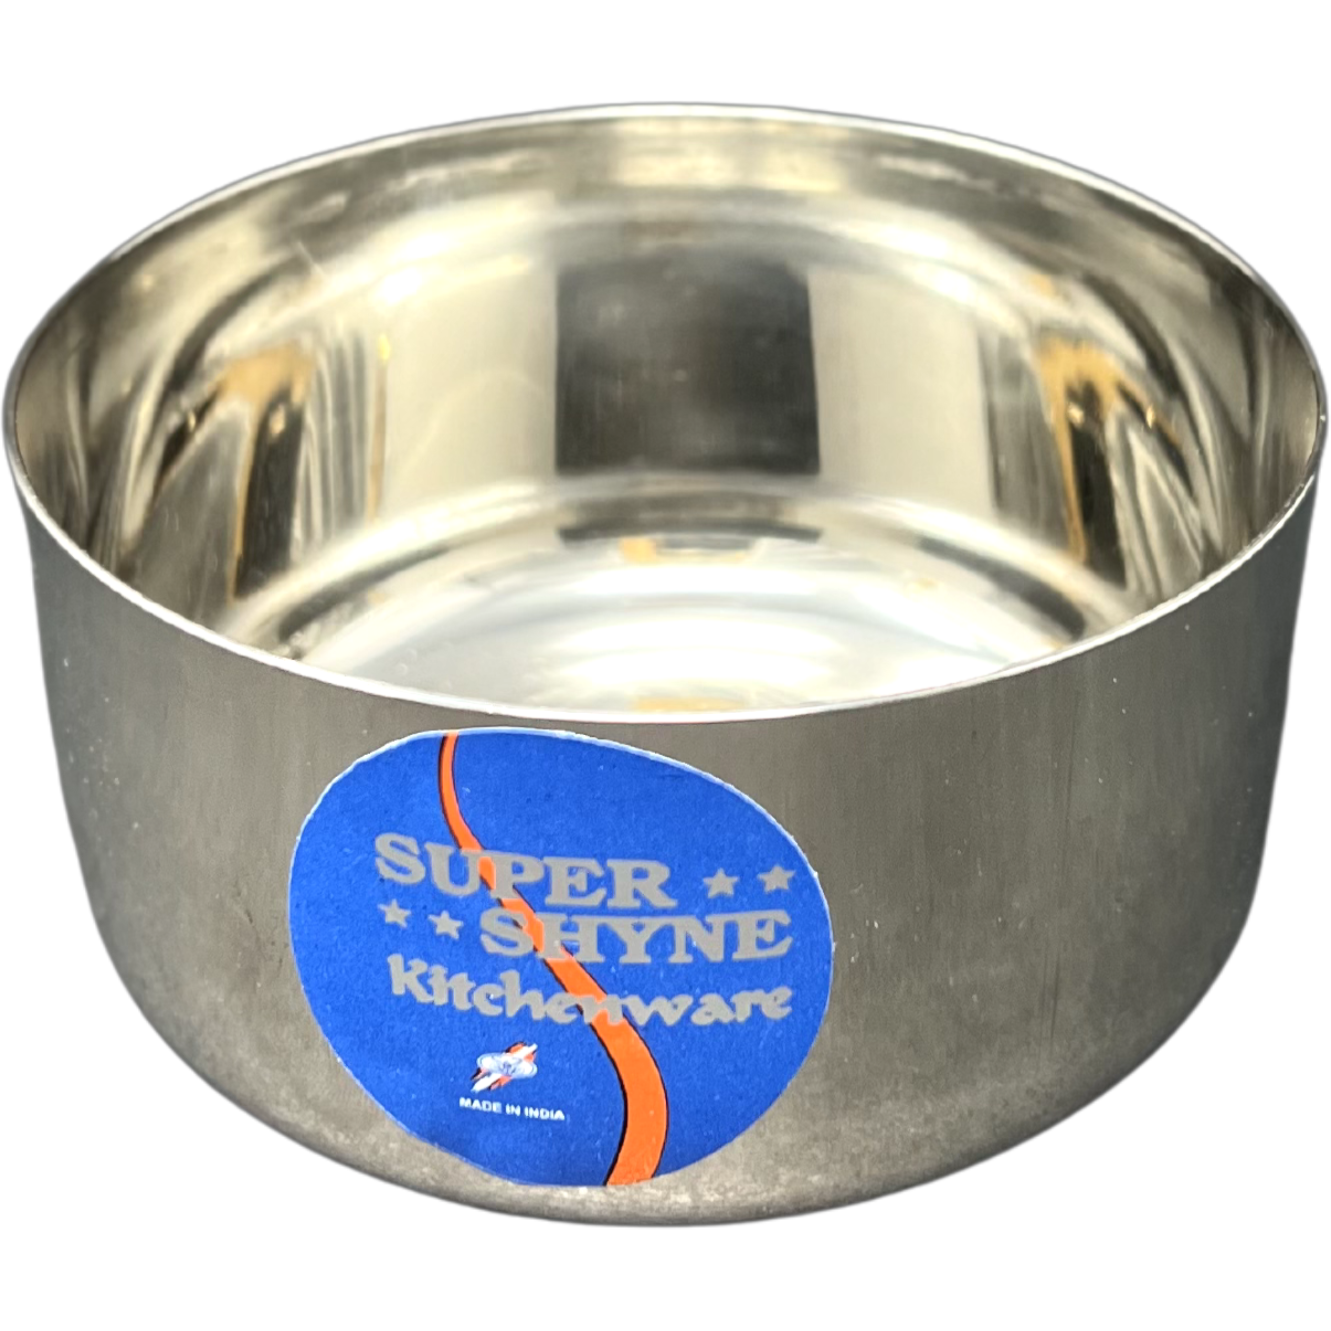 Super Shyne Stainless Steel Mini Bowl - 2.5 Inch